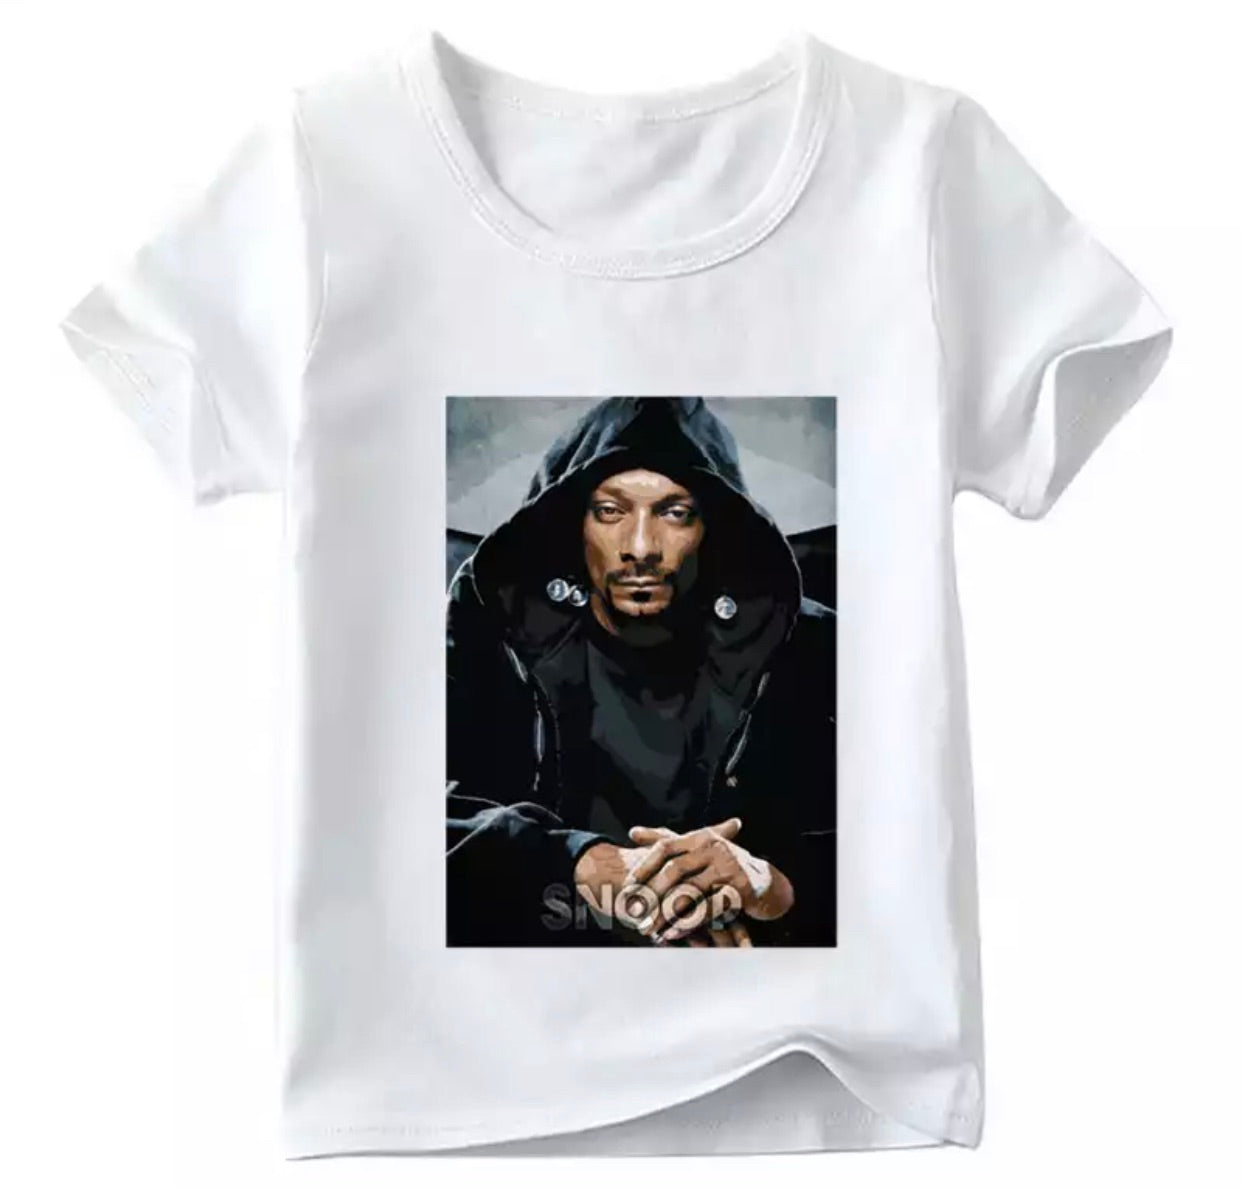 Matching Family Snoop Tee - Adult & Child - nixonscloset